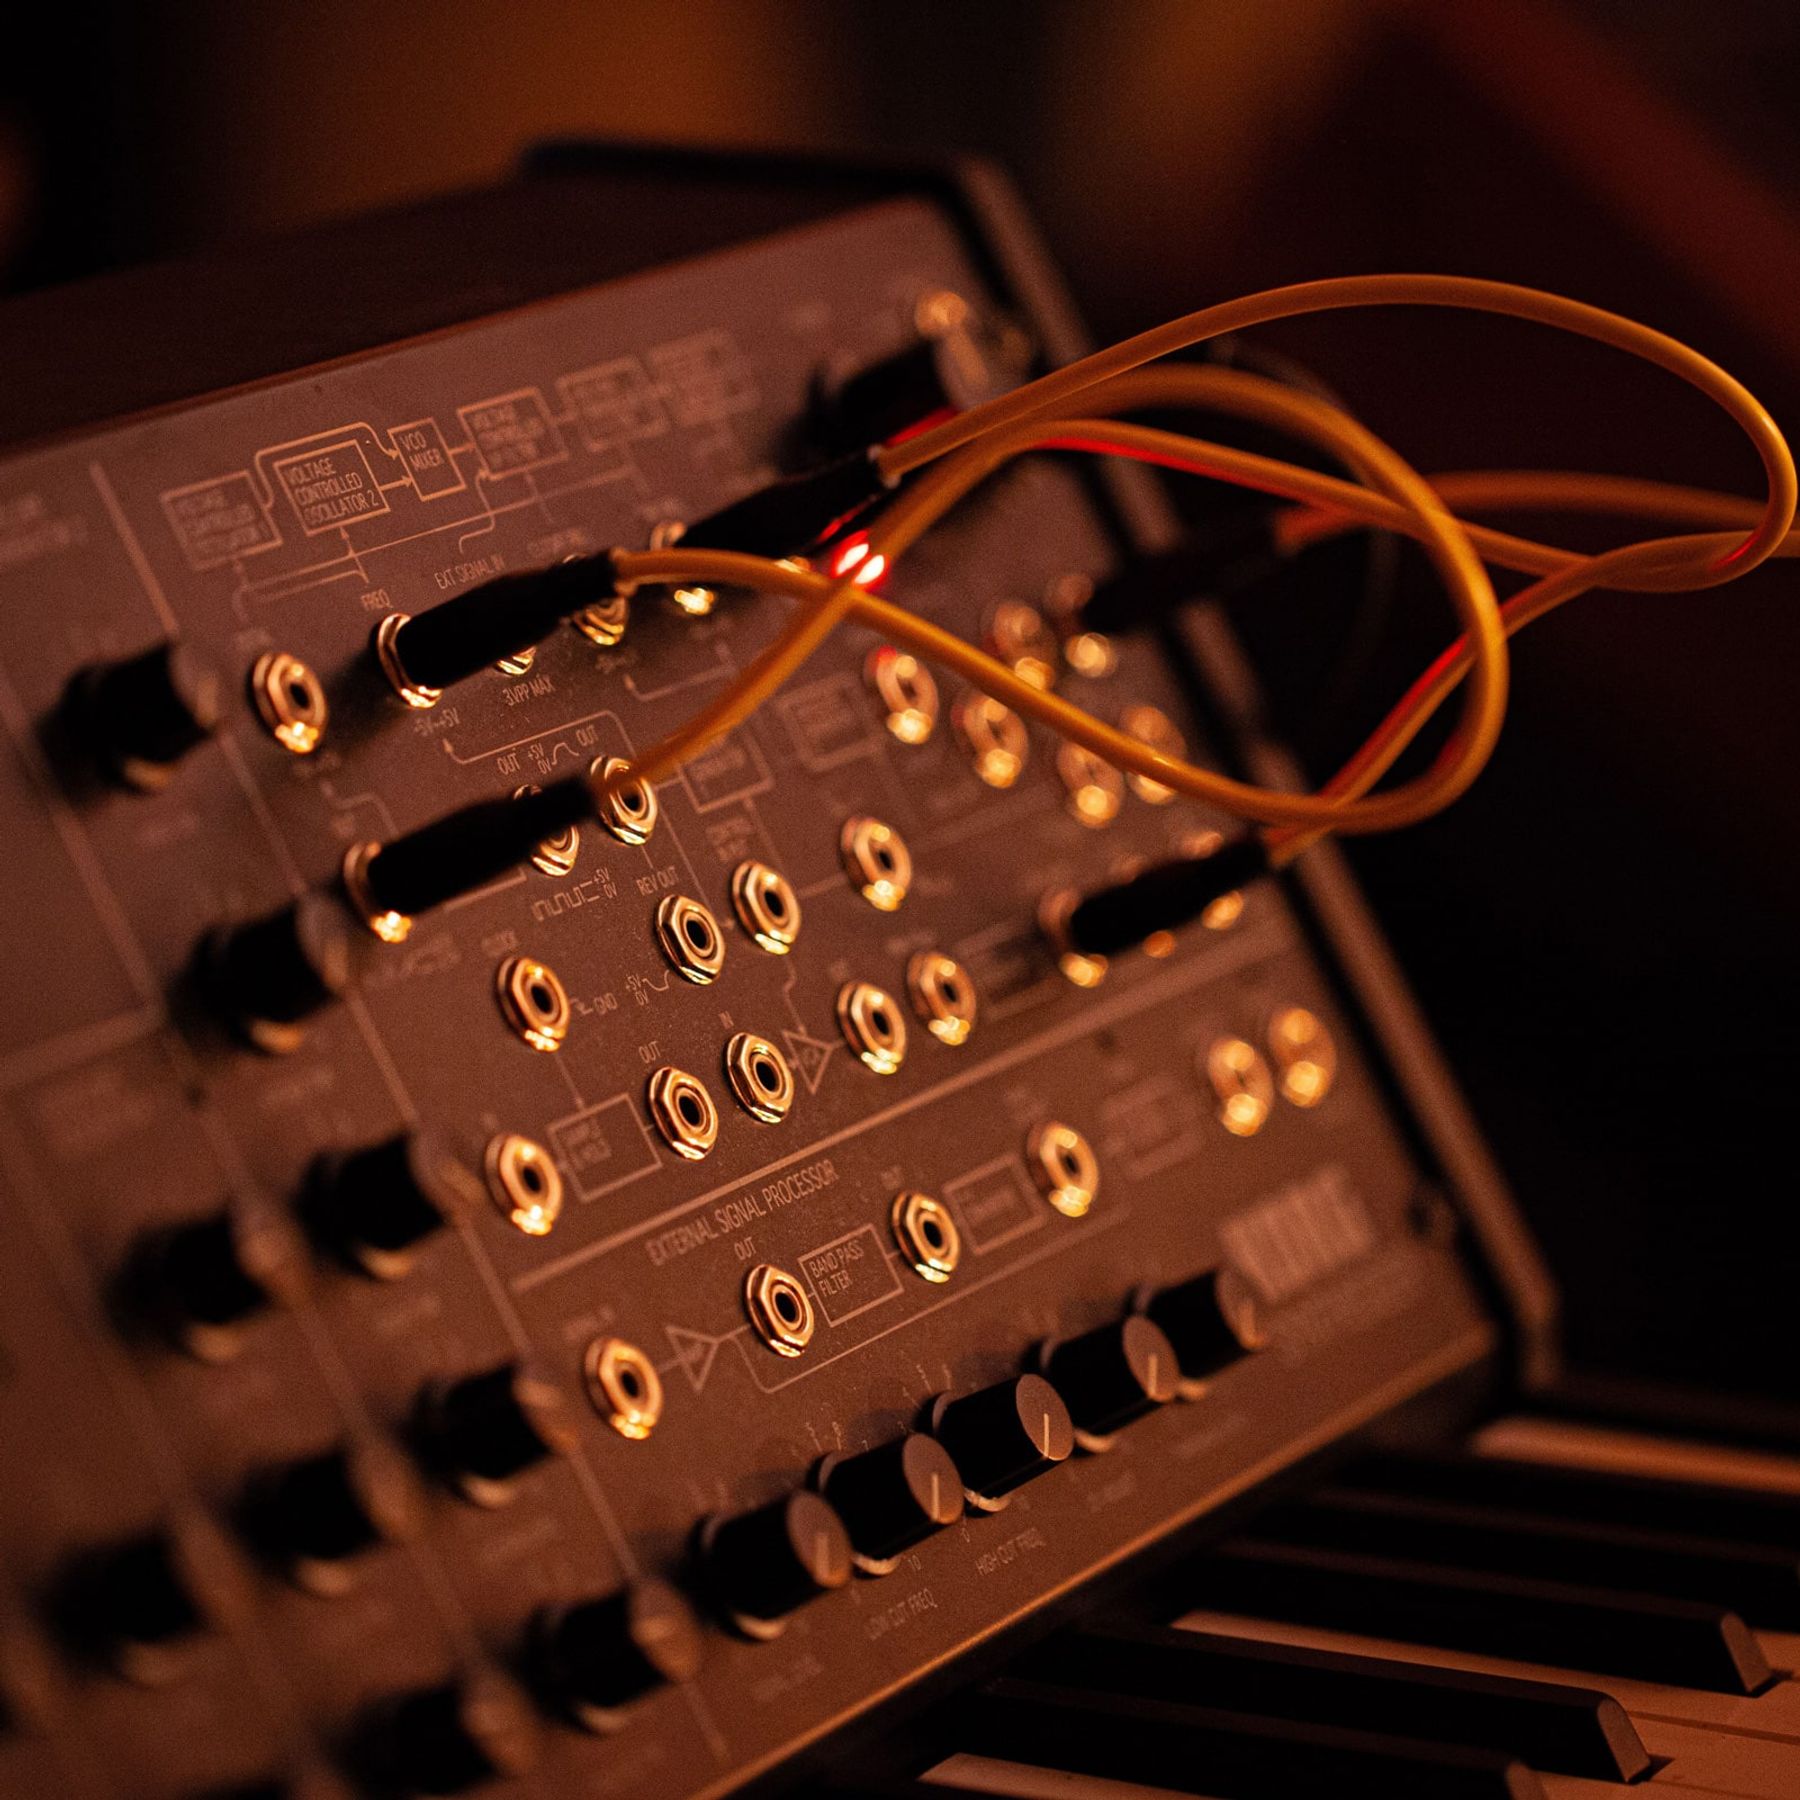 Roland Juno-106 in amber light Key+Needle Studios A Room